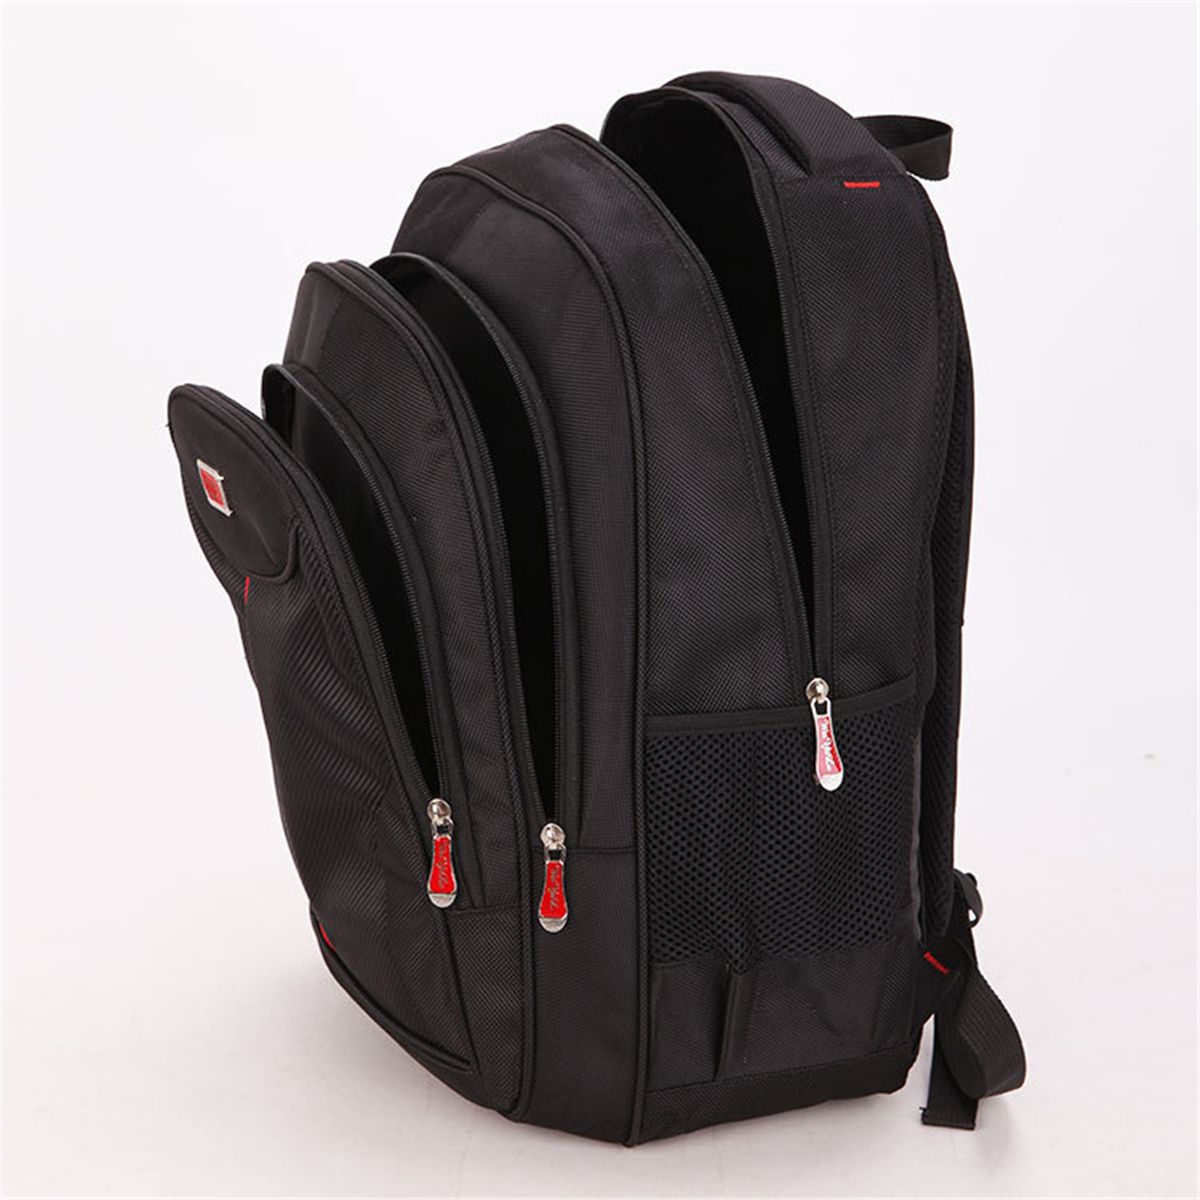 Outdoor-Business-Backpack-Laptop-Bag-Mens-Schoolbag-Large-Capacity-Women-Travel-Storage-Bag-Computer-1744120